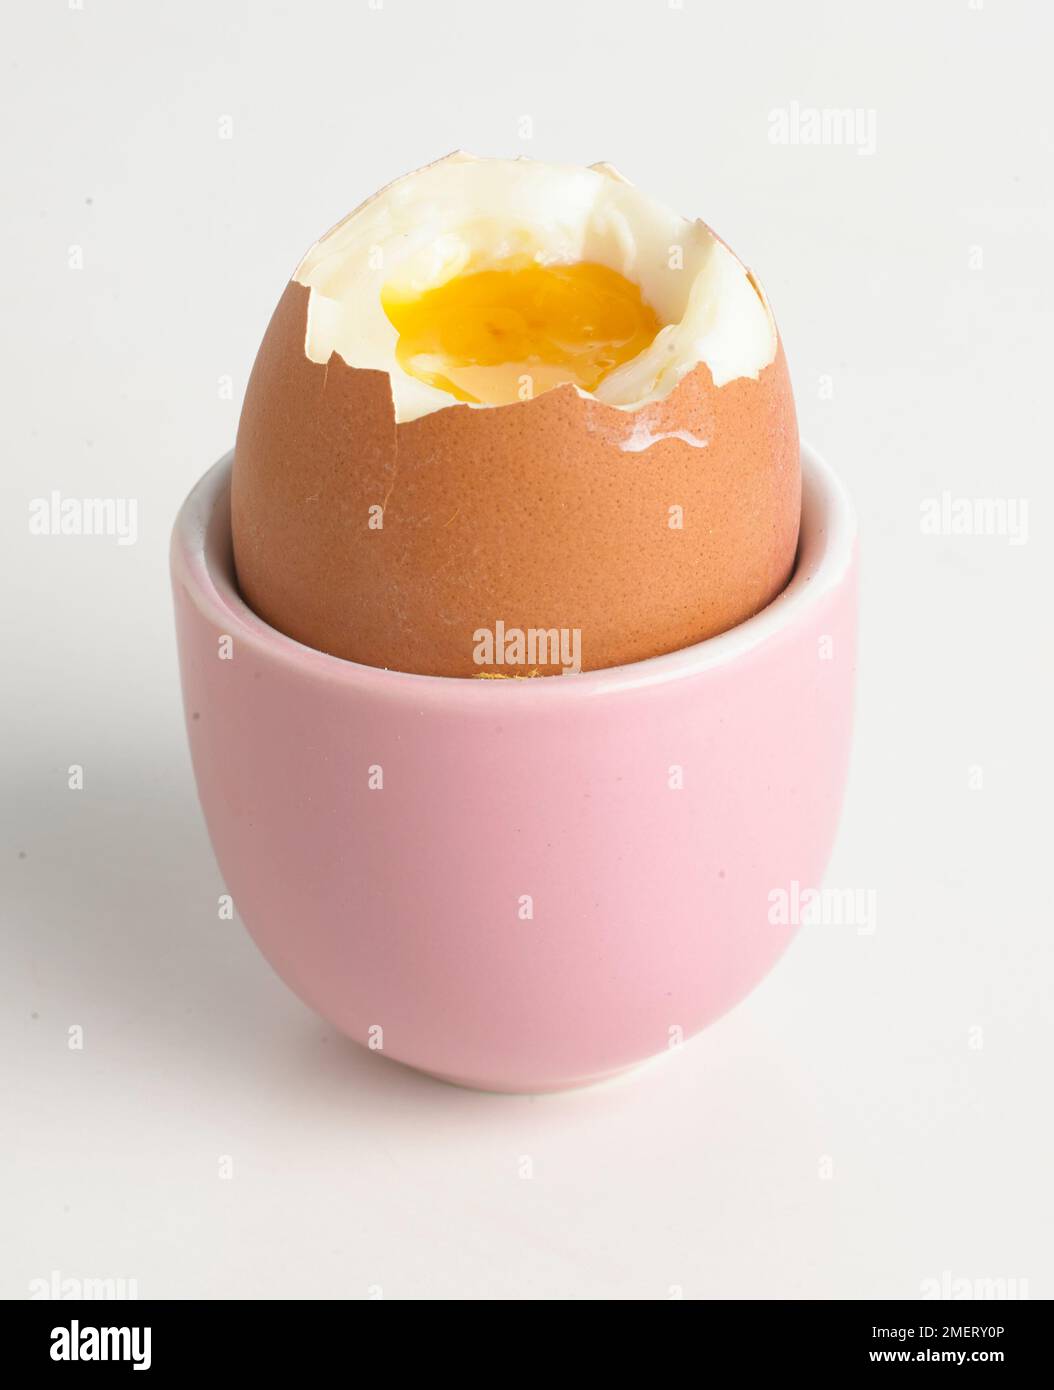 Egg Cups Cartoon Egg Holders - Soft Hard Boiled Egg Cups for Breakfast - 11  Pcs